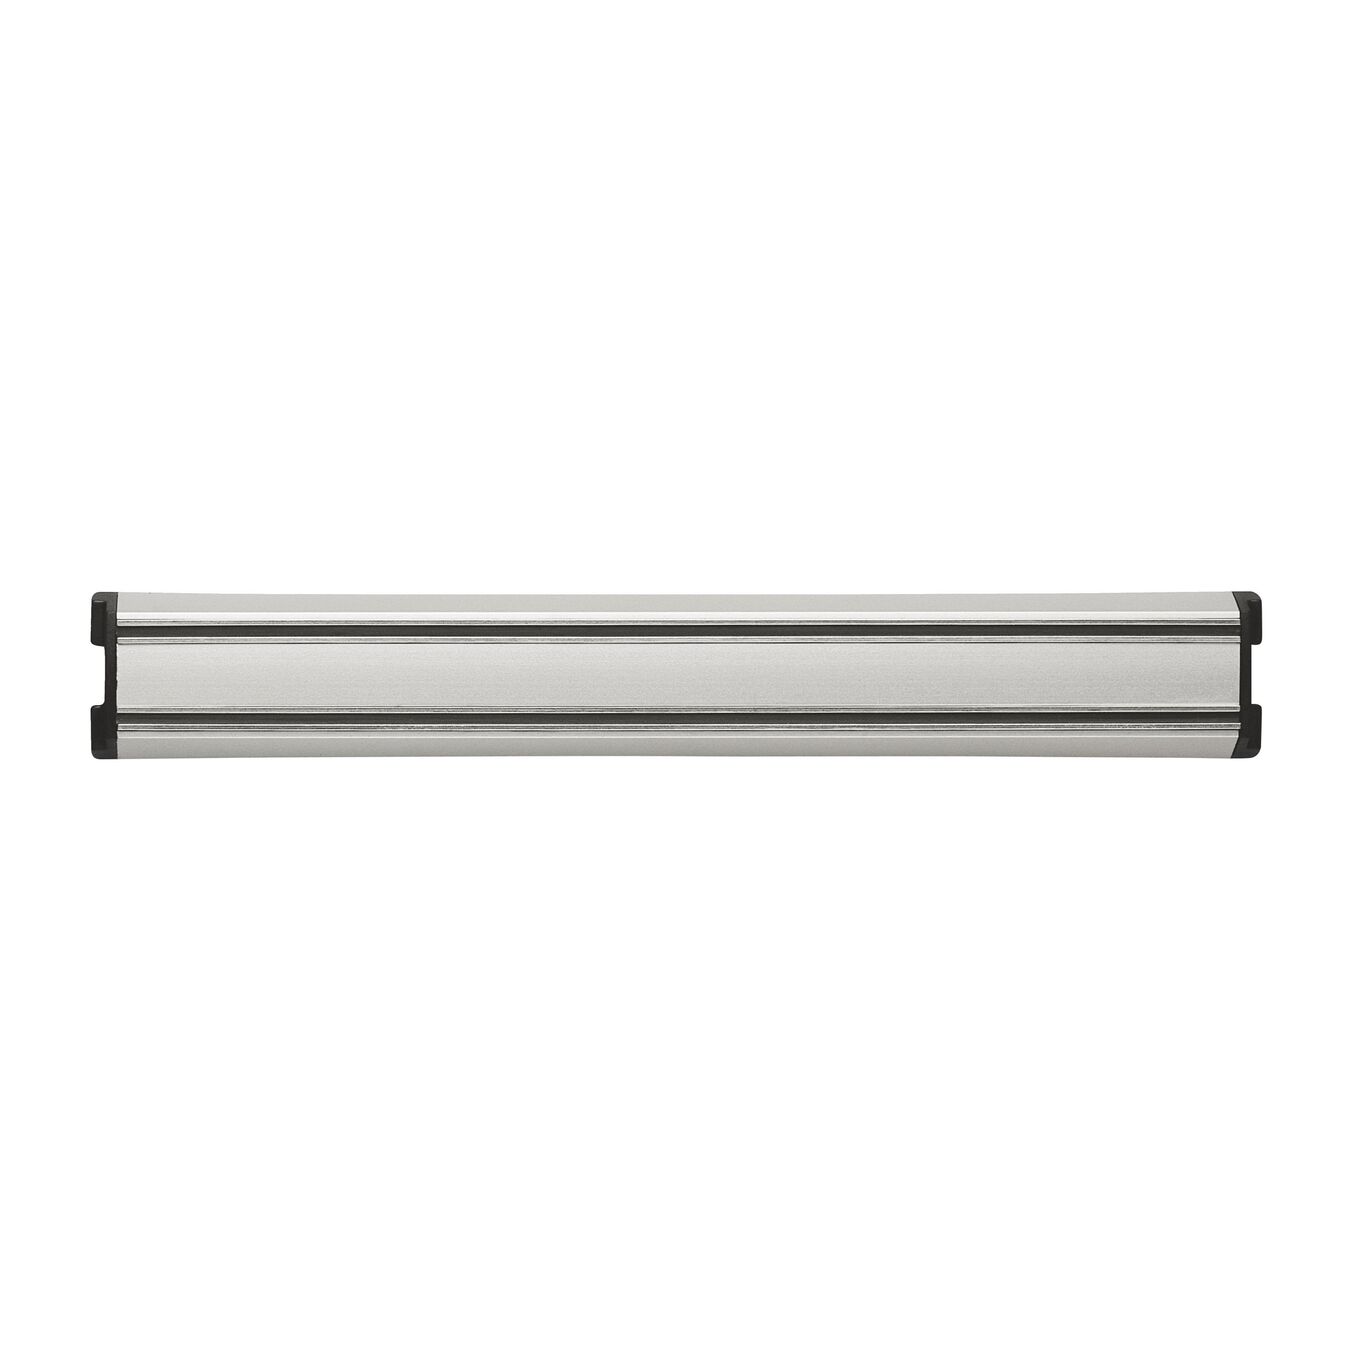 Magnetic knife bar 30 cm aluminium,,large 1